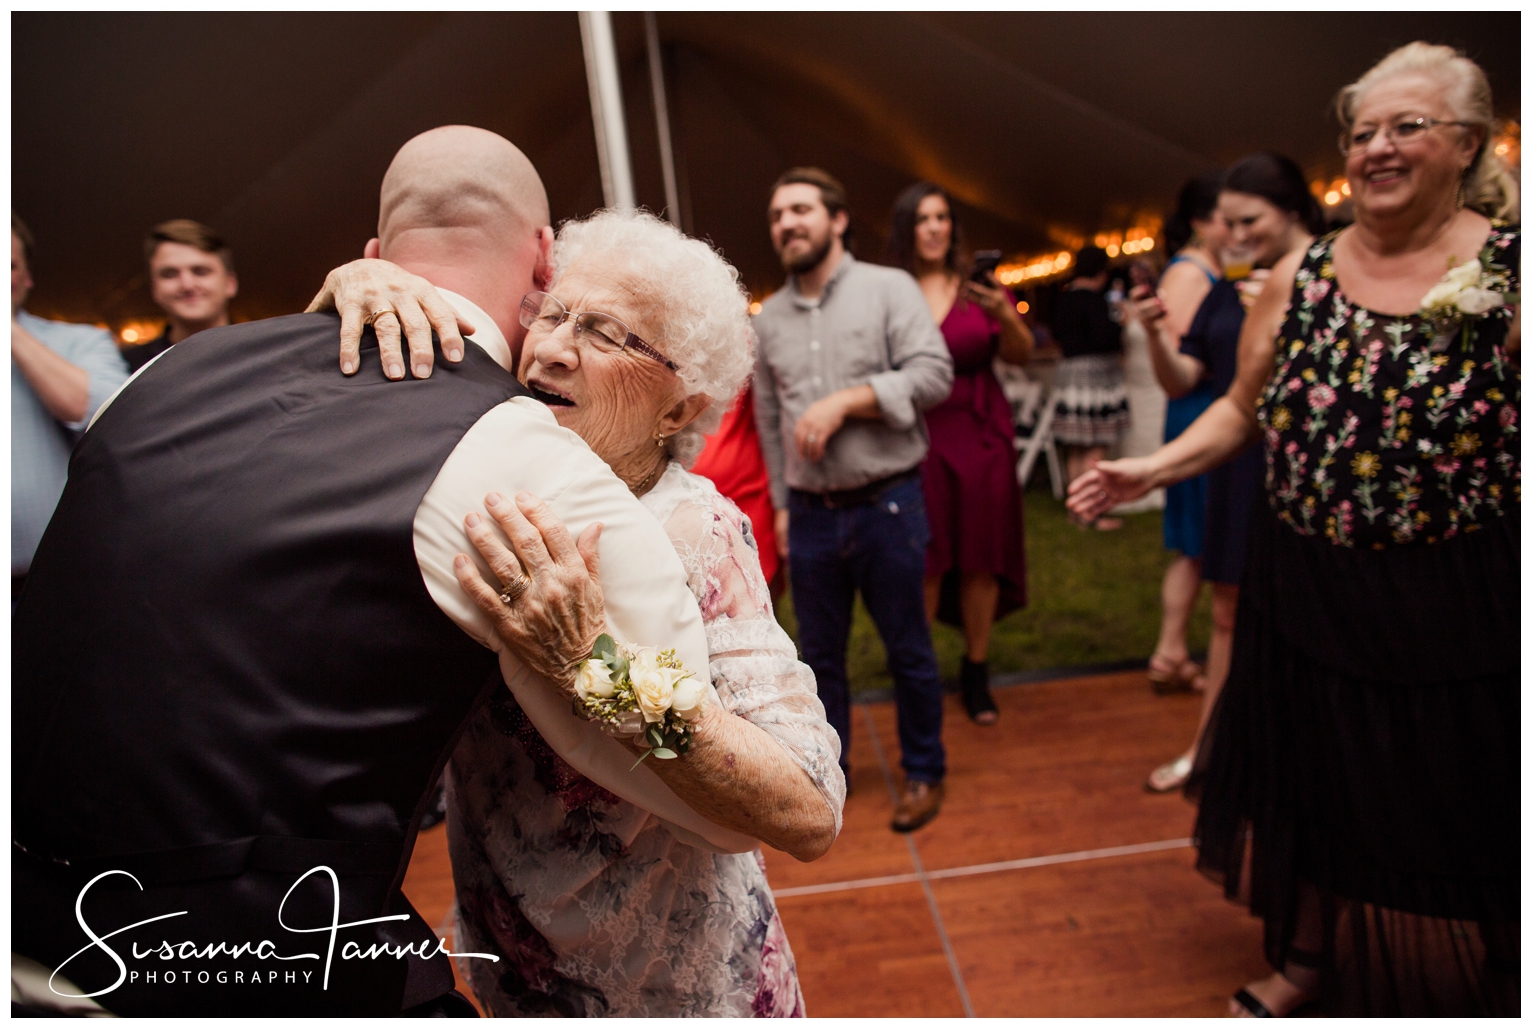 Indianapolis Outdoor Wedding, groom hugging elderly grandma on dance floor. Her face looks radiant